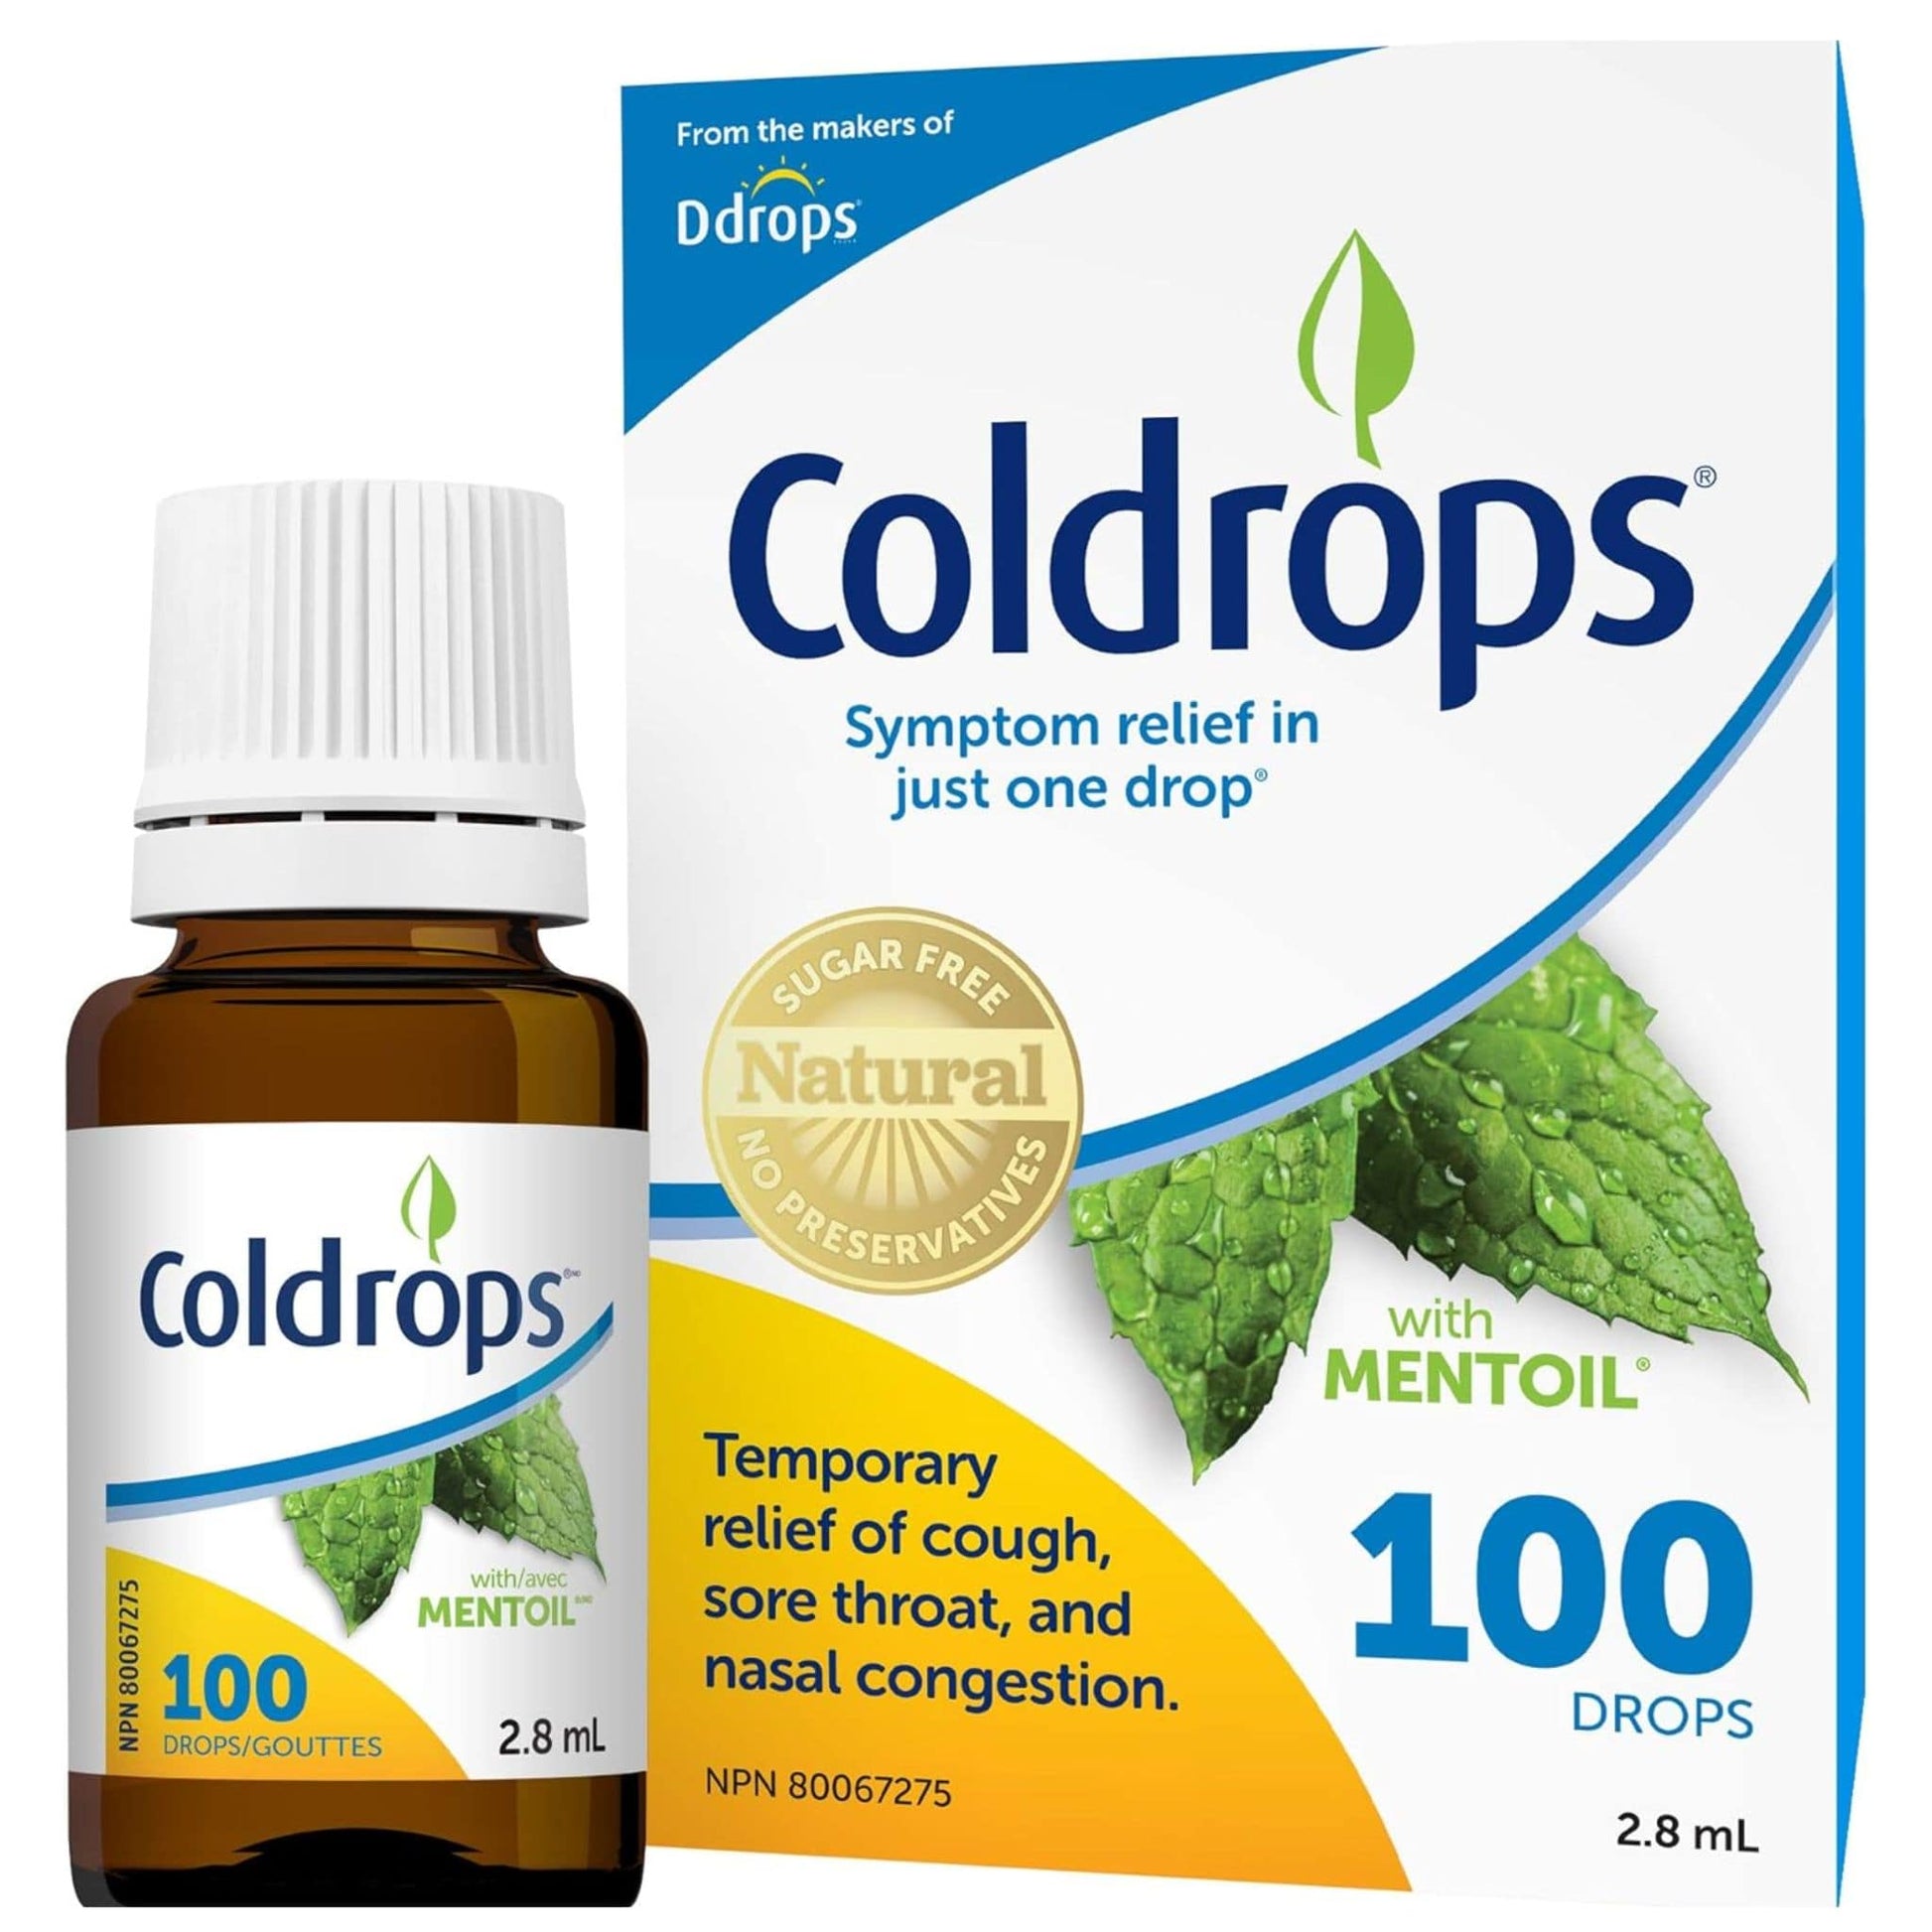 Ddrops Colddrops with Mentoil